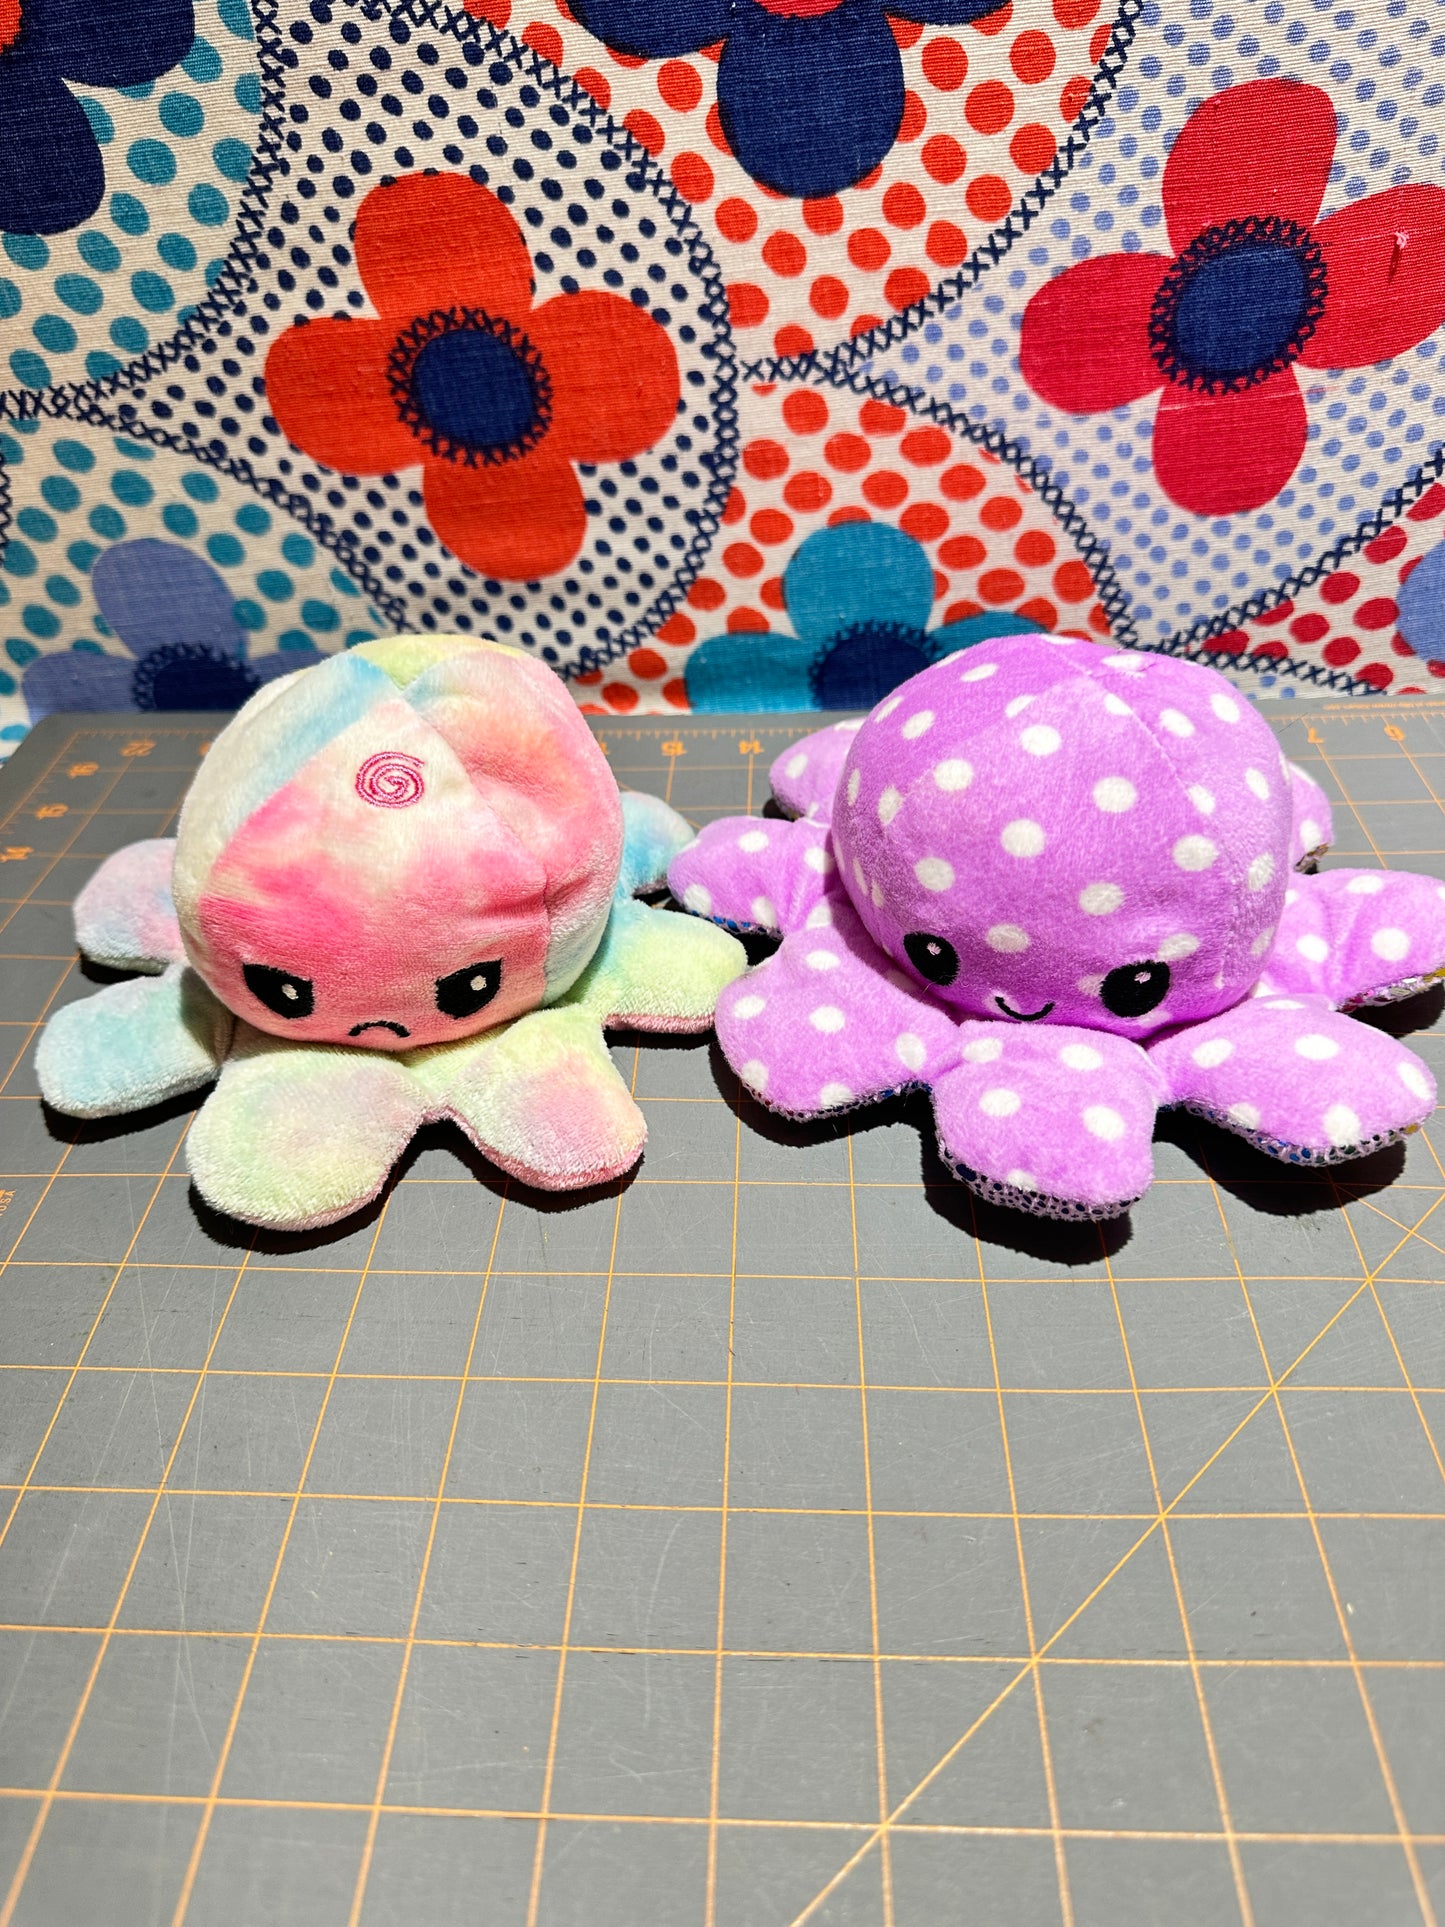 Pair of Reversible Plush Octopuses? Octopi? Octopus? - 7"dia